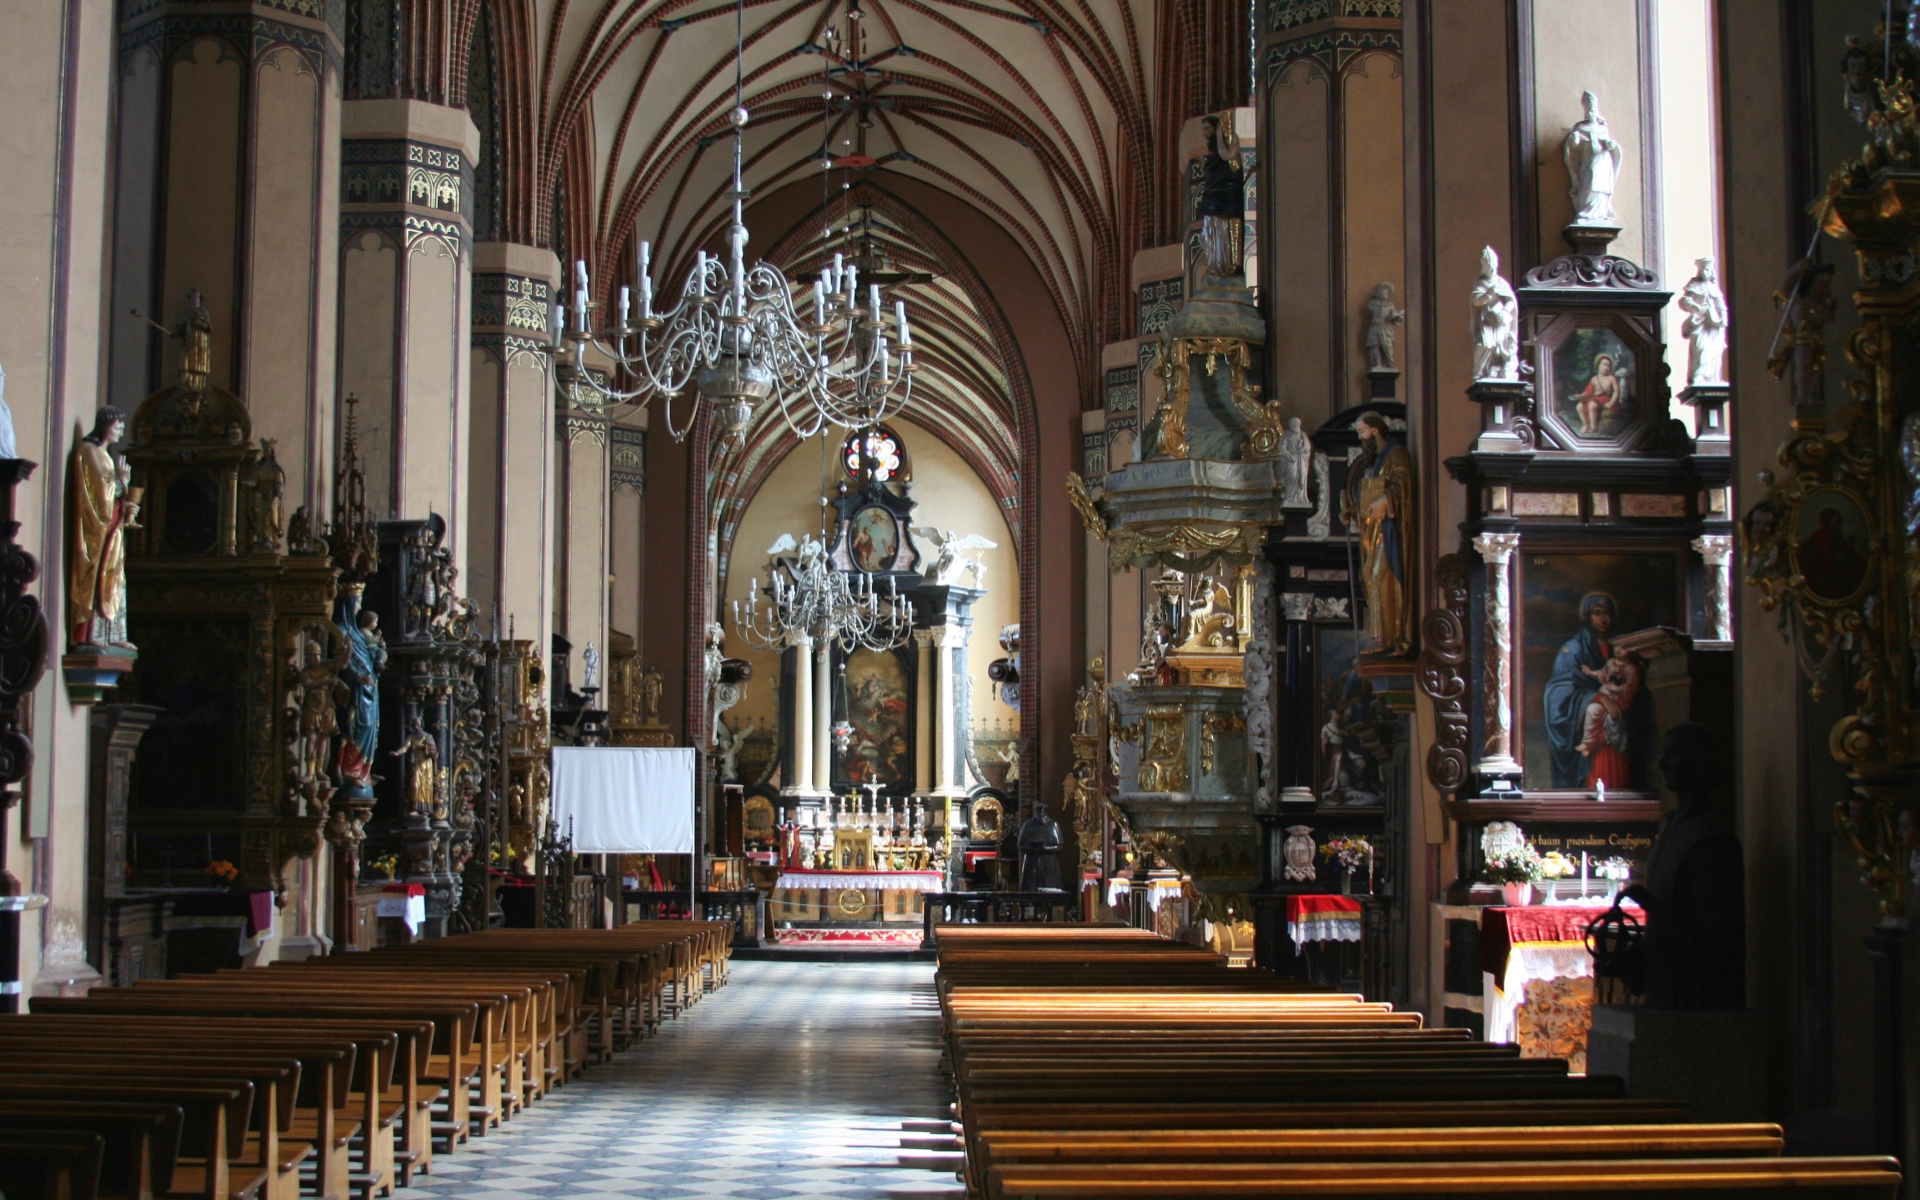 329711 descargar imagen religioso, catedral de frombork, catedrales: fondos de pantalla y protectores de pantalla gratis